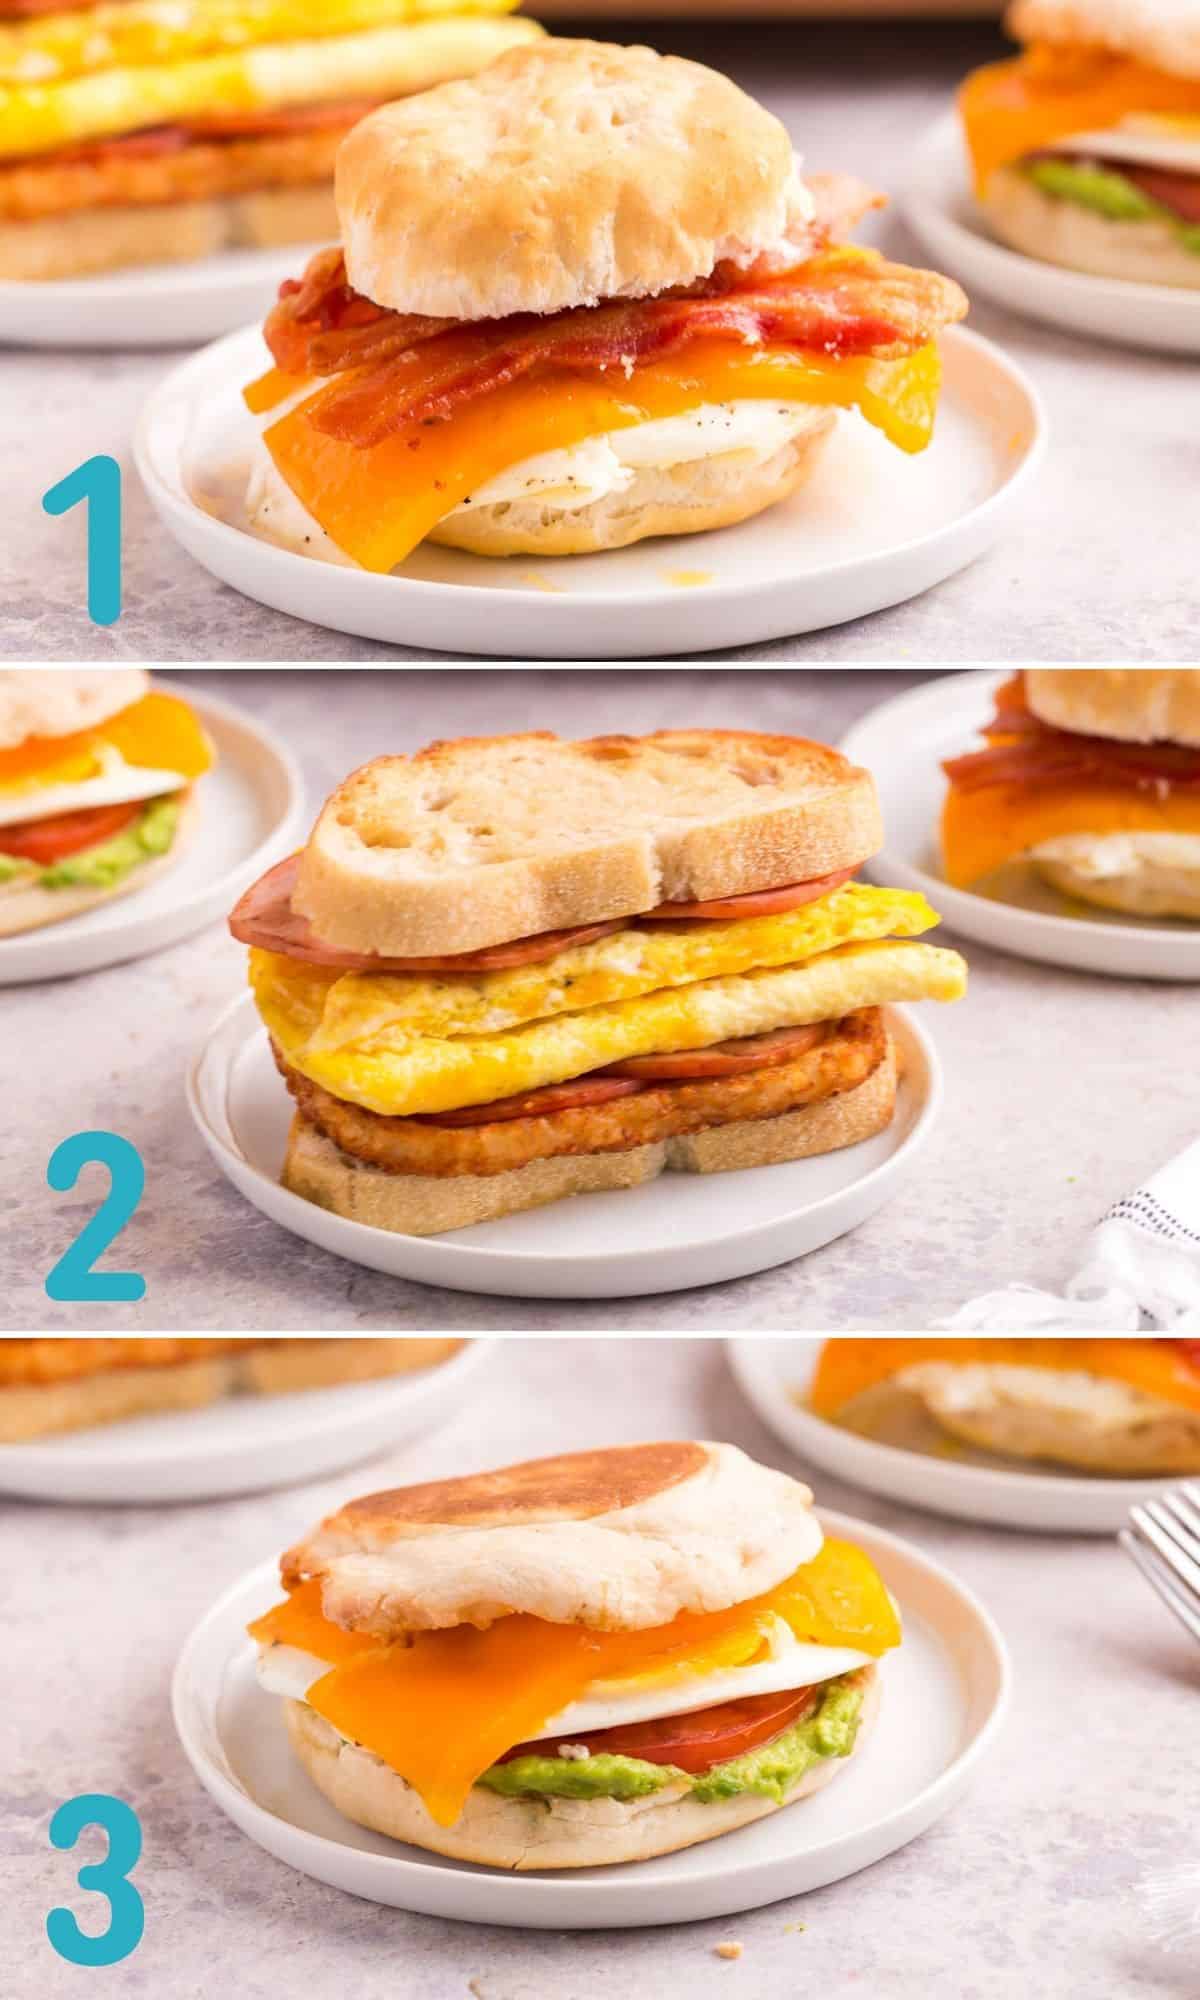 Three varieties of egg sandwiches.